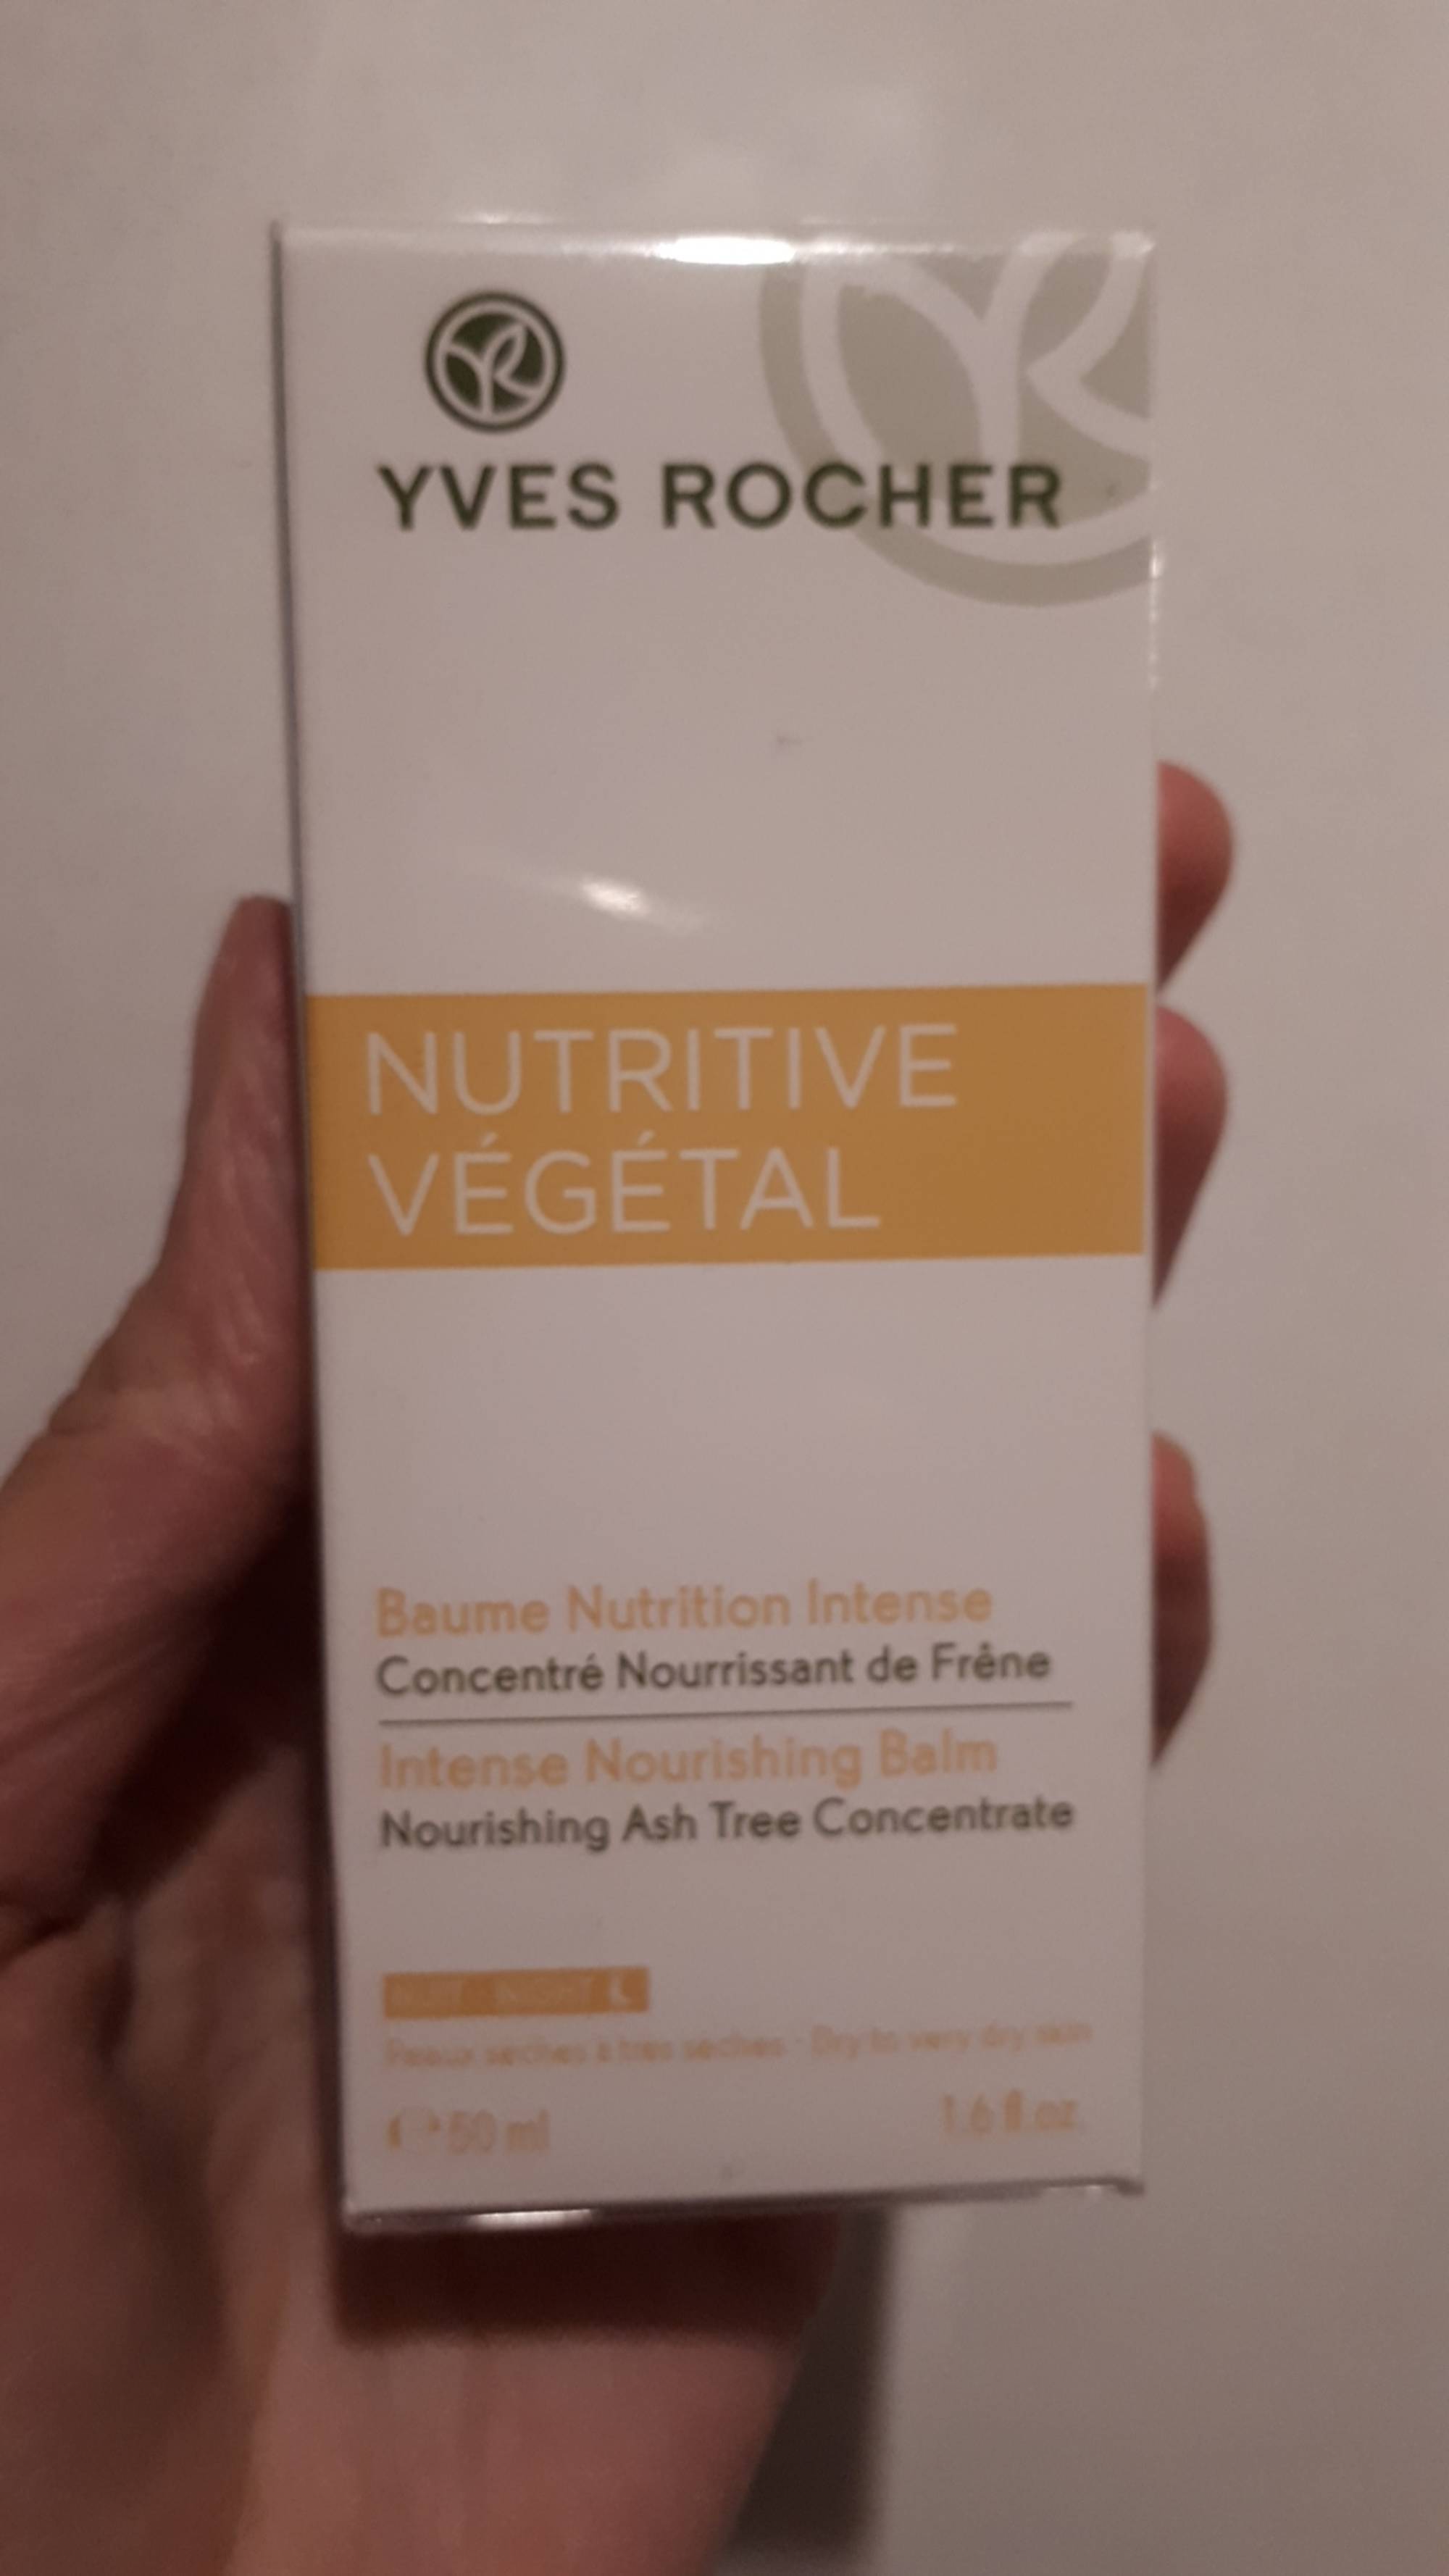 YVES ROCHER - Nutritive végétal - Baume nutrition intense